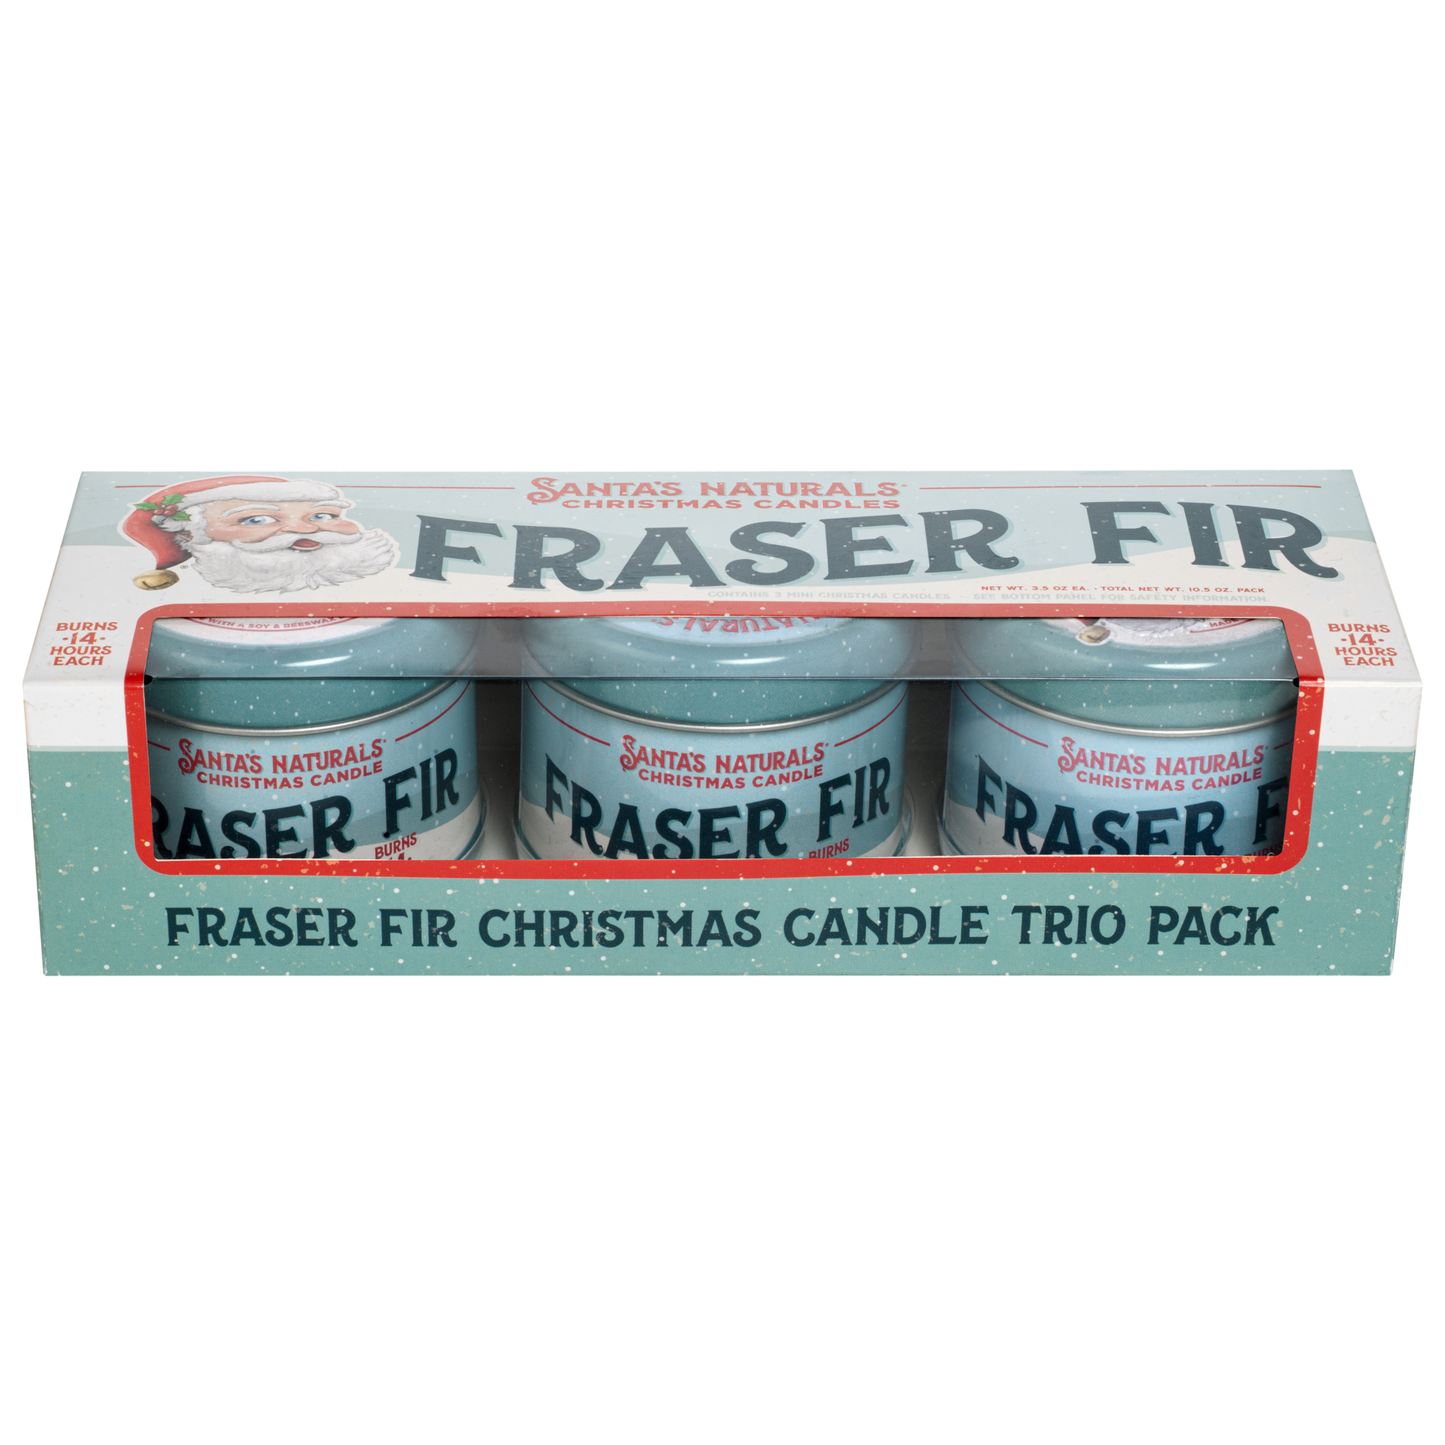 Santa's Naturals Fraser Fir Mini Trio Candle Set - Case of 6